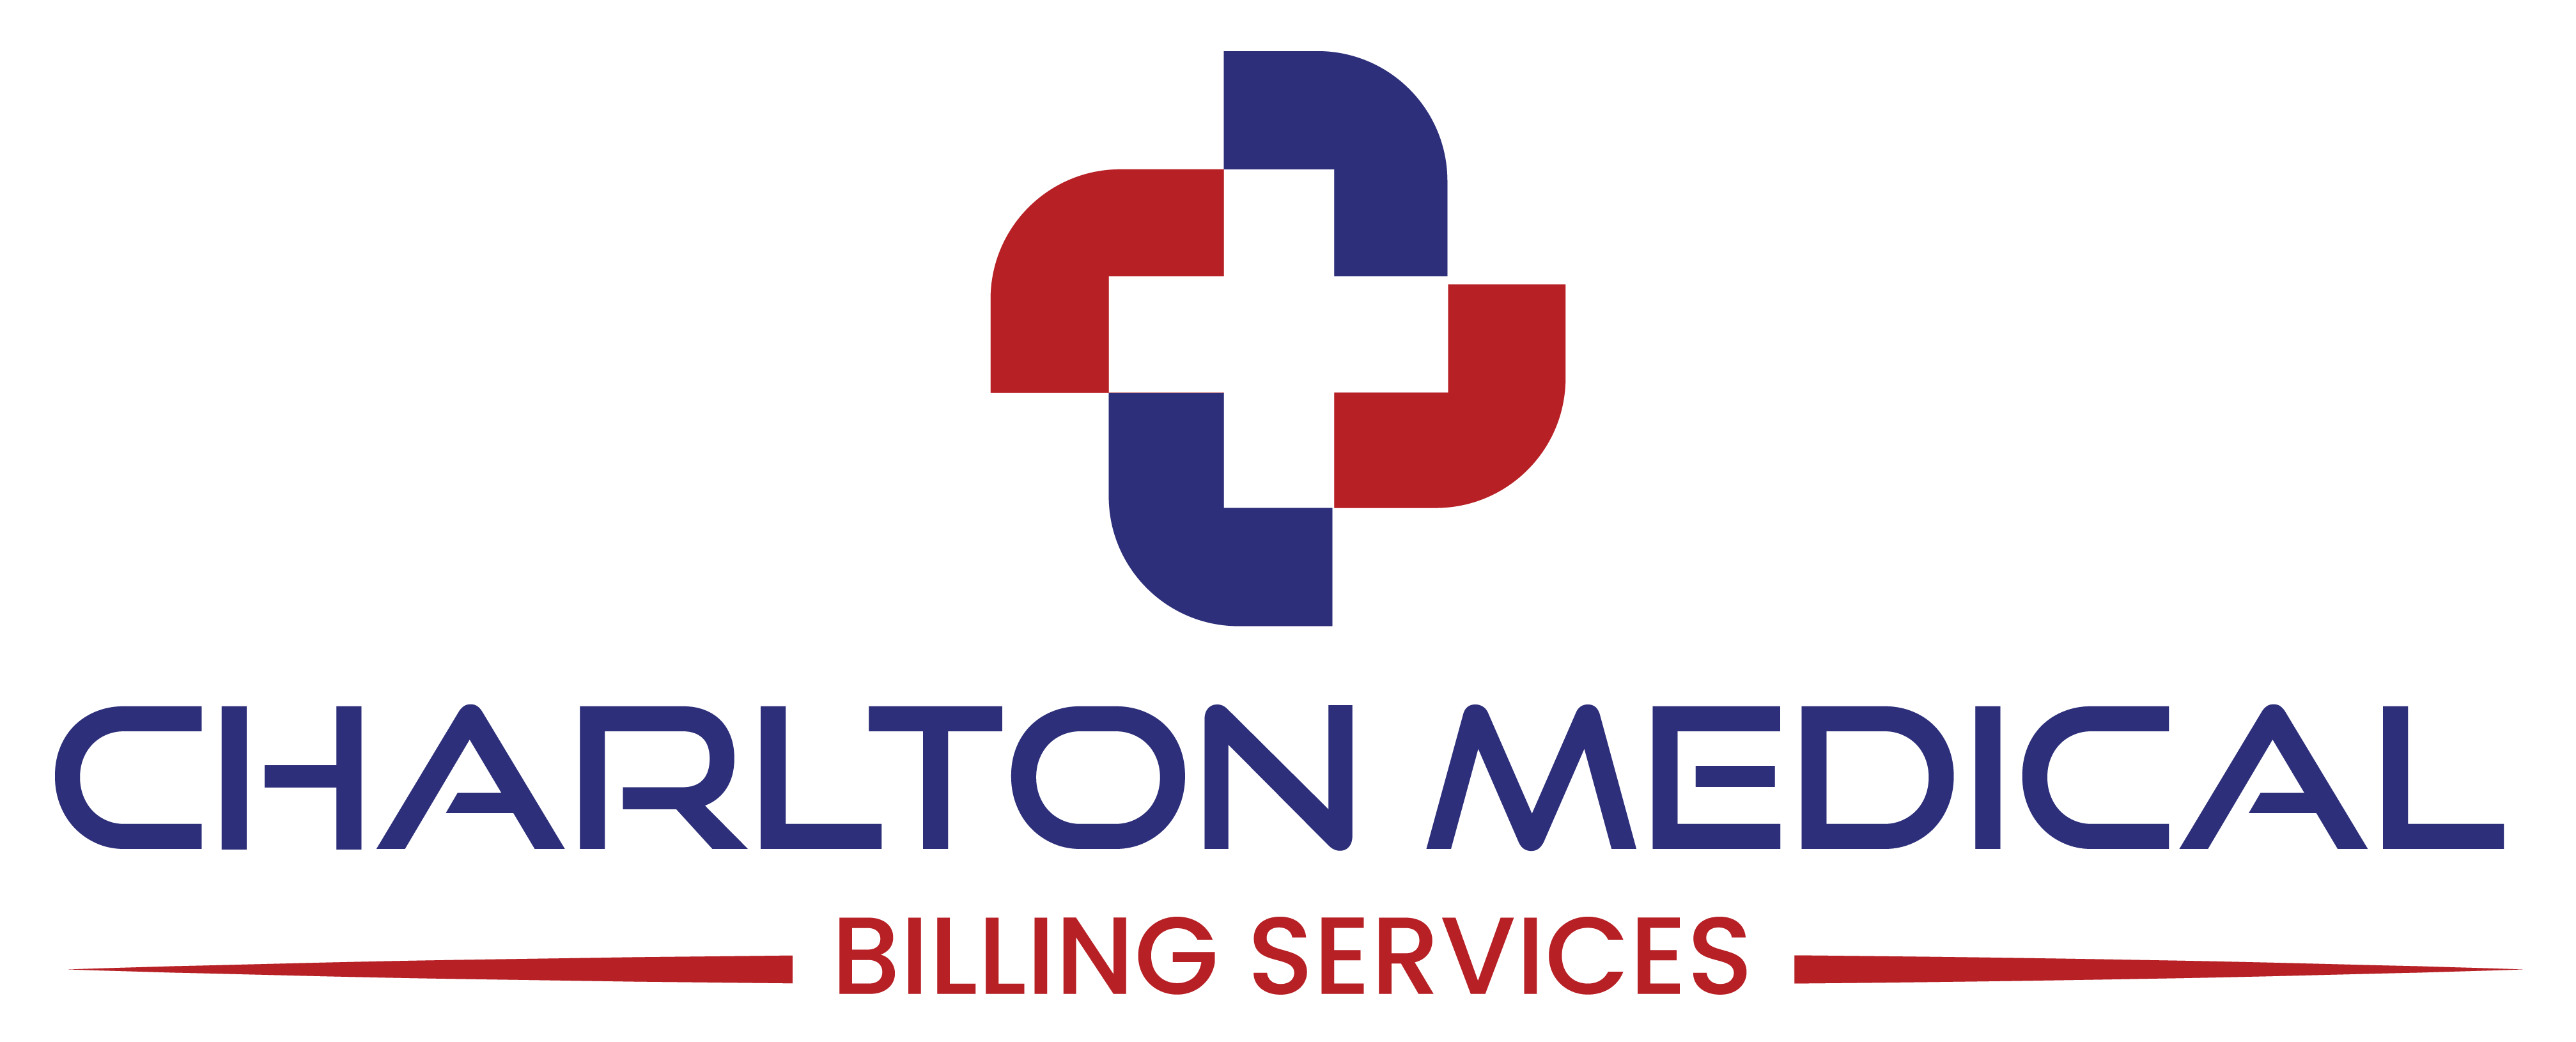 Charlton Medical Billing